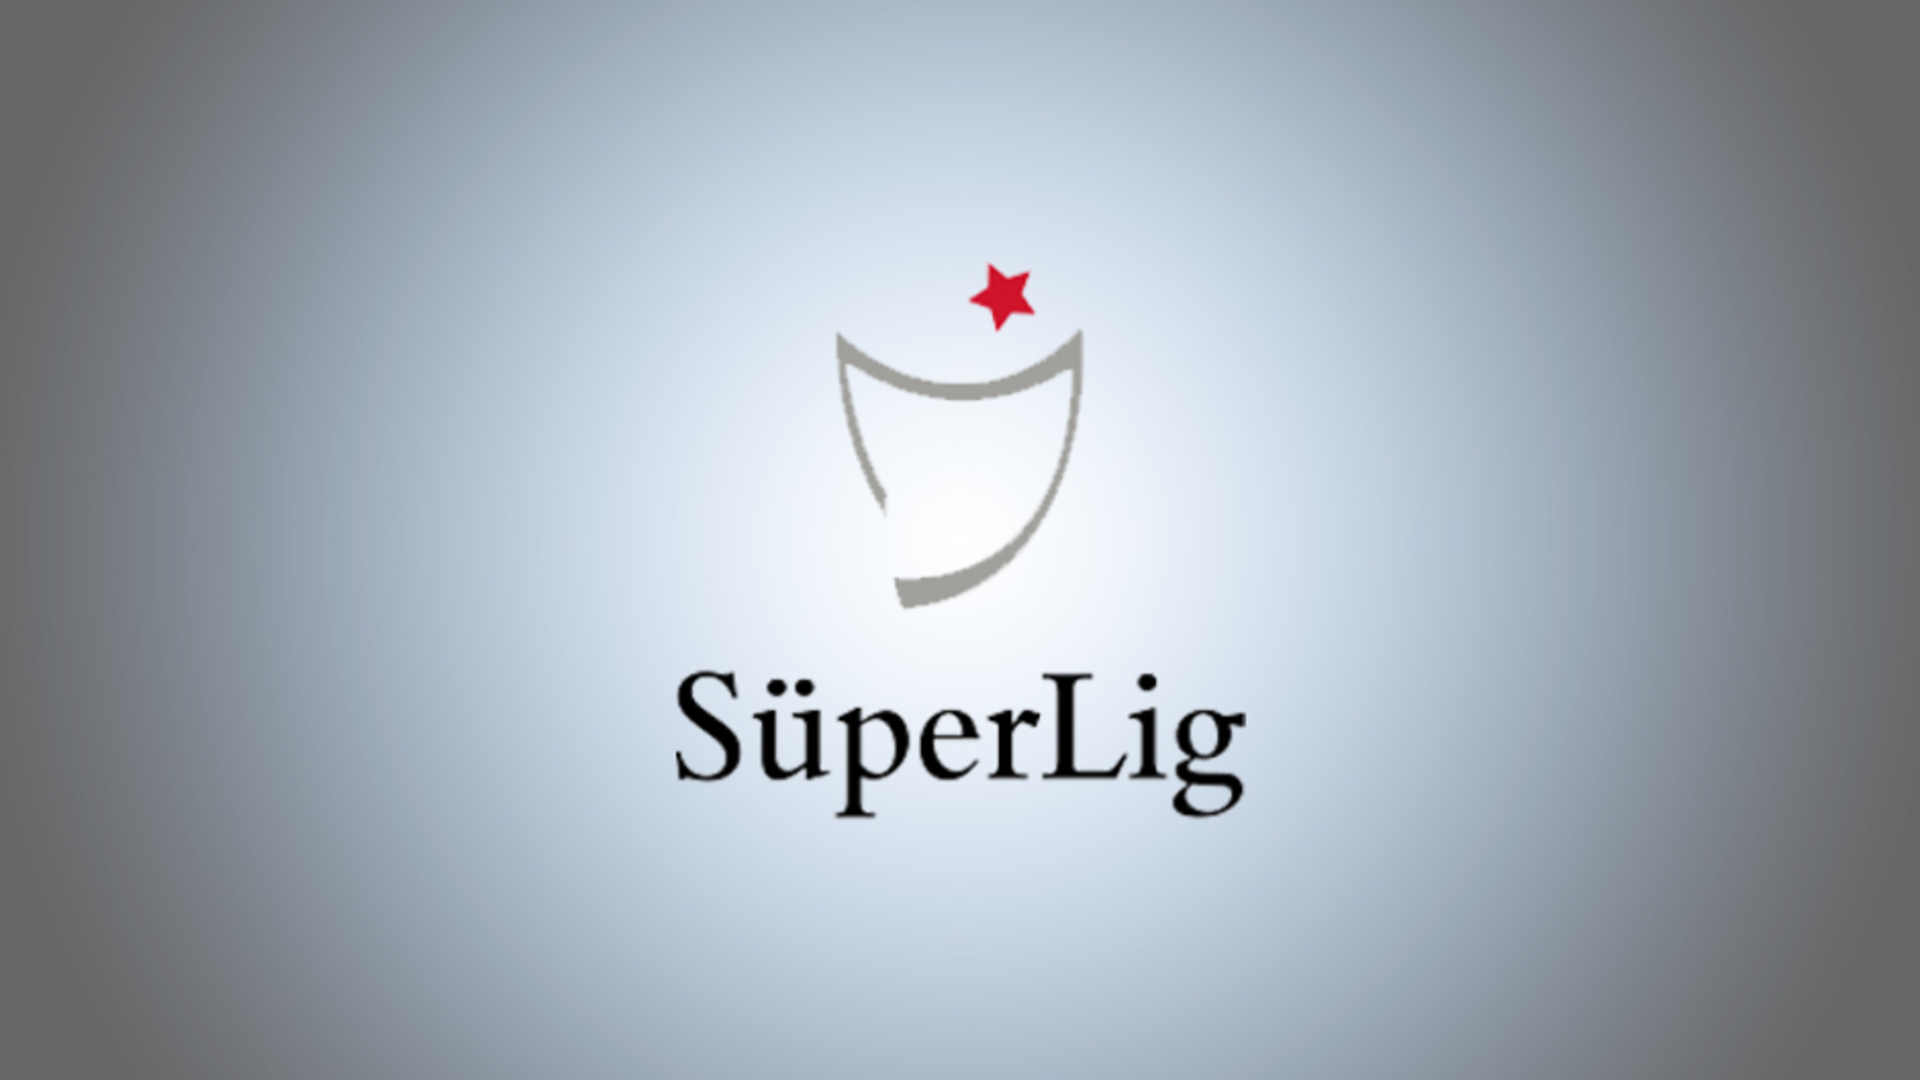 Super Lig. Lig. Чемпионат Турции по футболу логотип. Spor Toto super Lig logo.